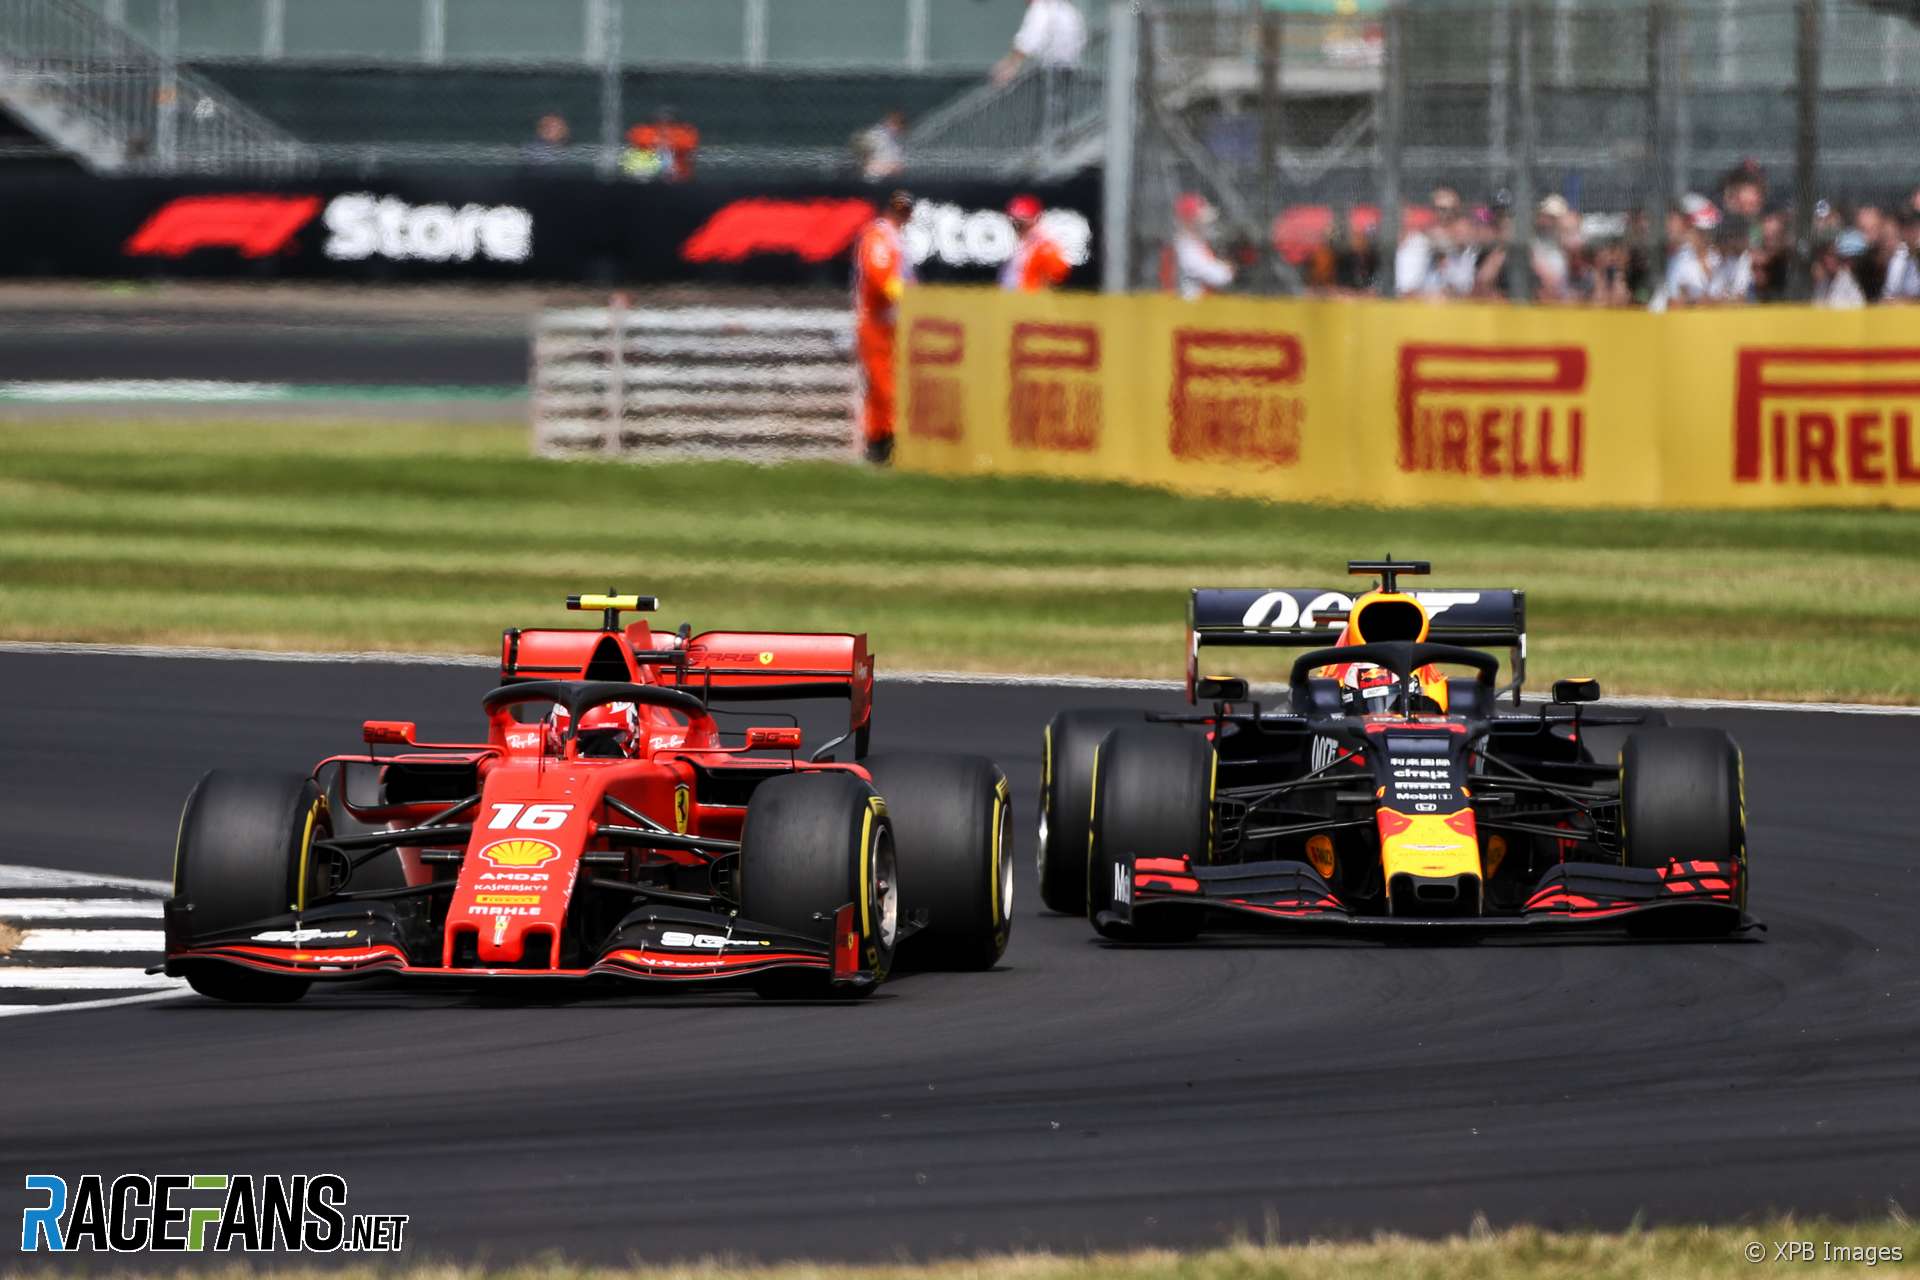 Charles Leclerc, Max Verstappen, Silverstone, 2019